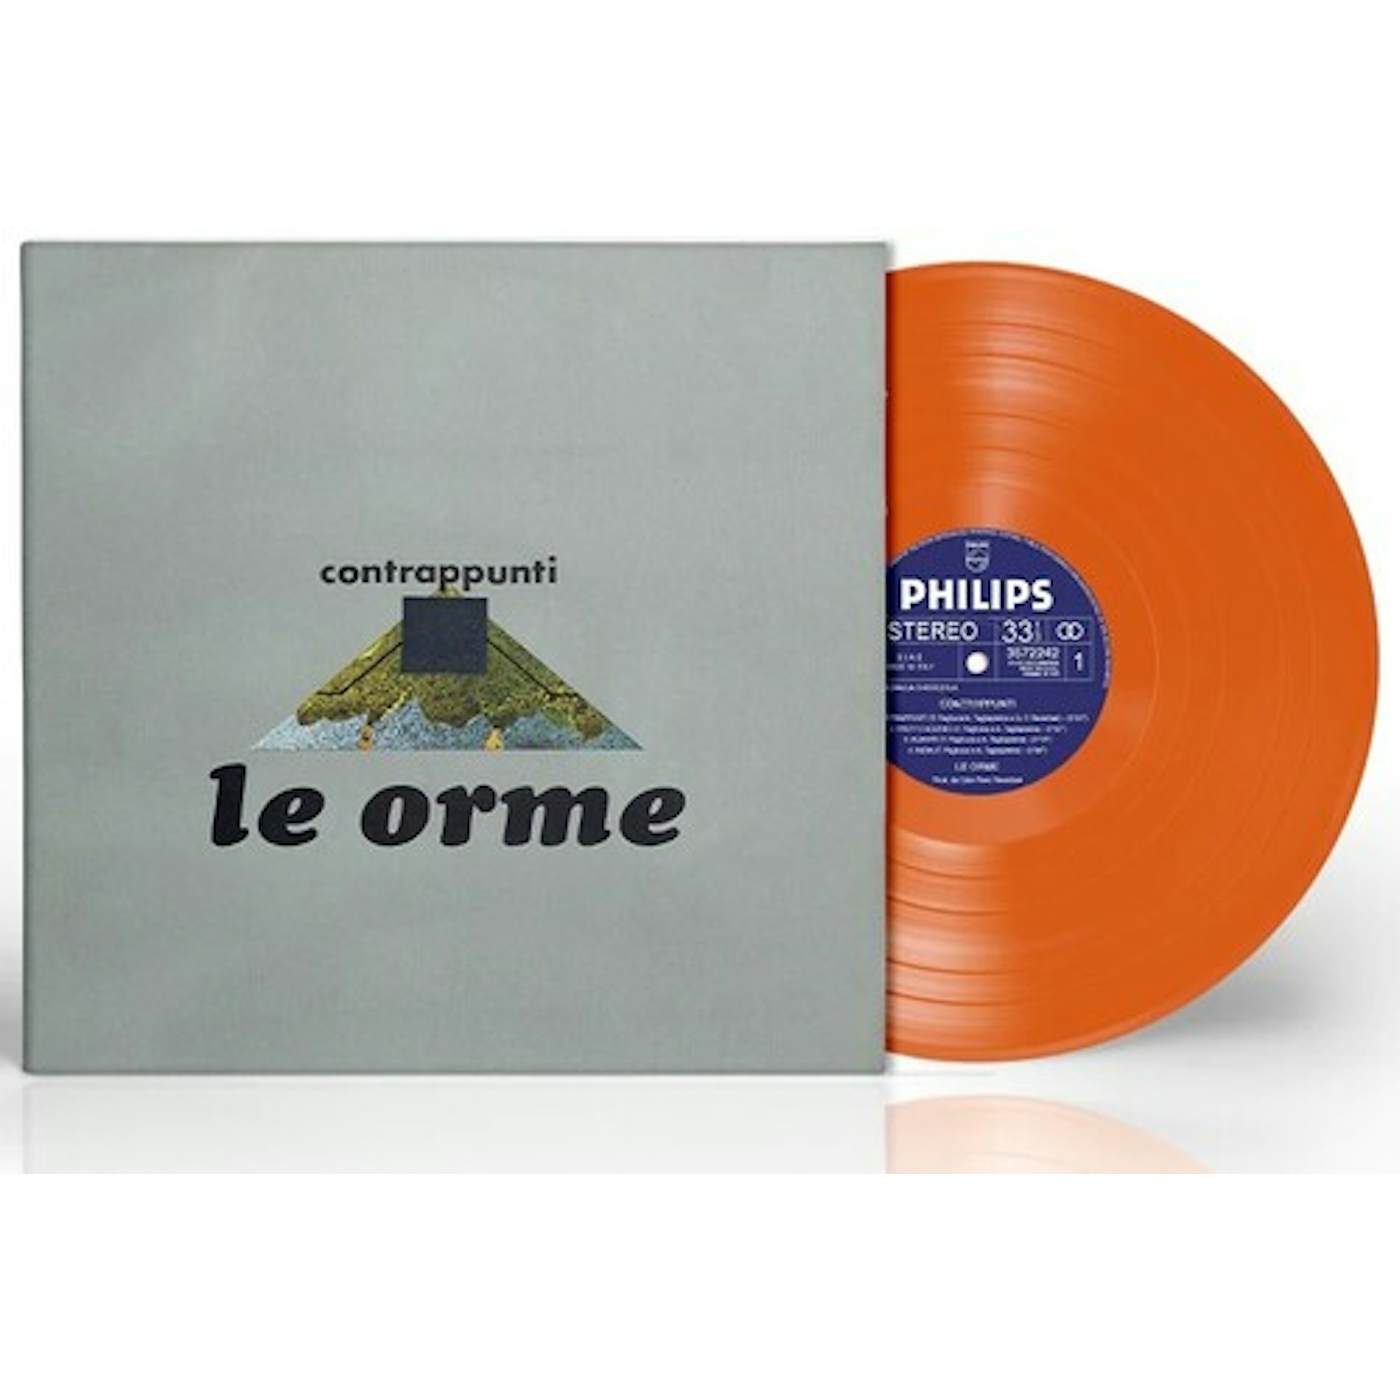 Le Orme  Contrappunti - Ltd Numbered Orange Vinyl Record